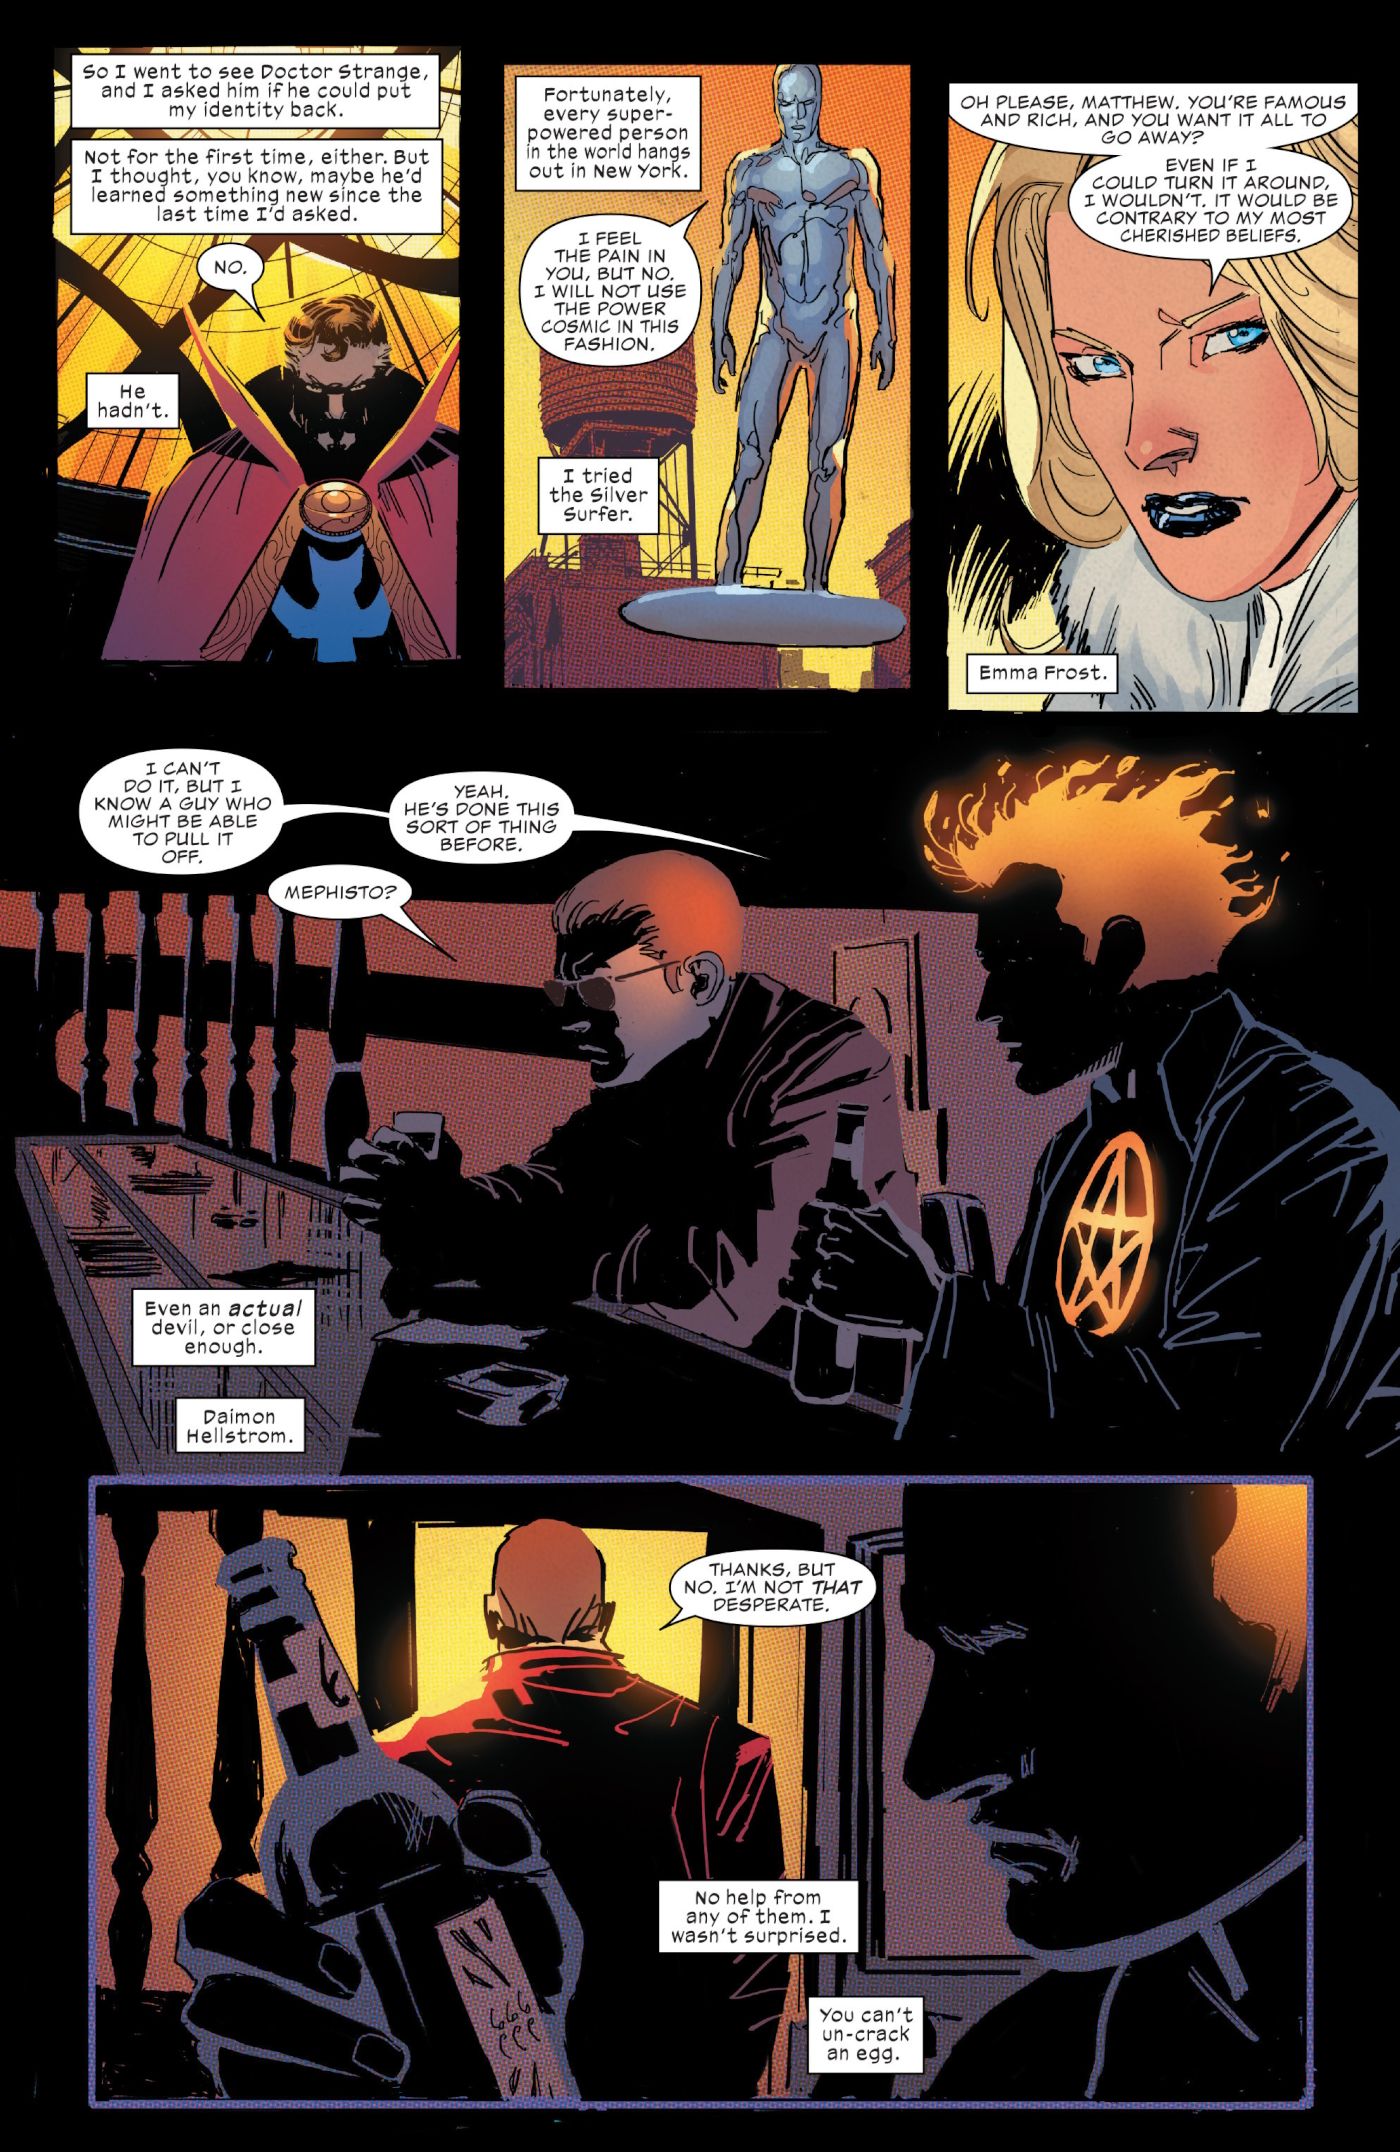 Daredevil #17, even Daredevil isn't desperate enough to deal with Mephisto